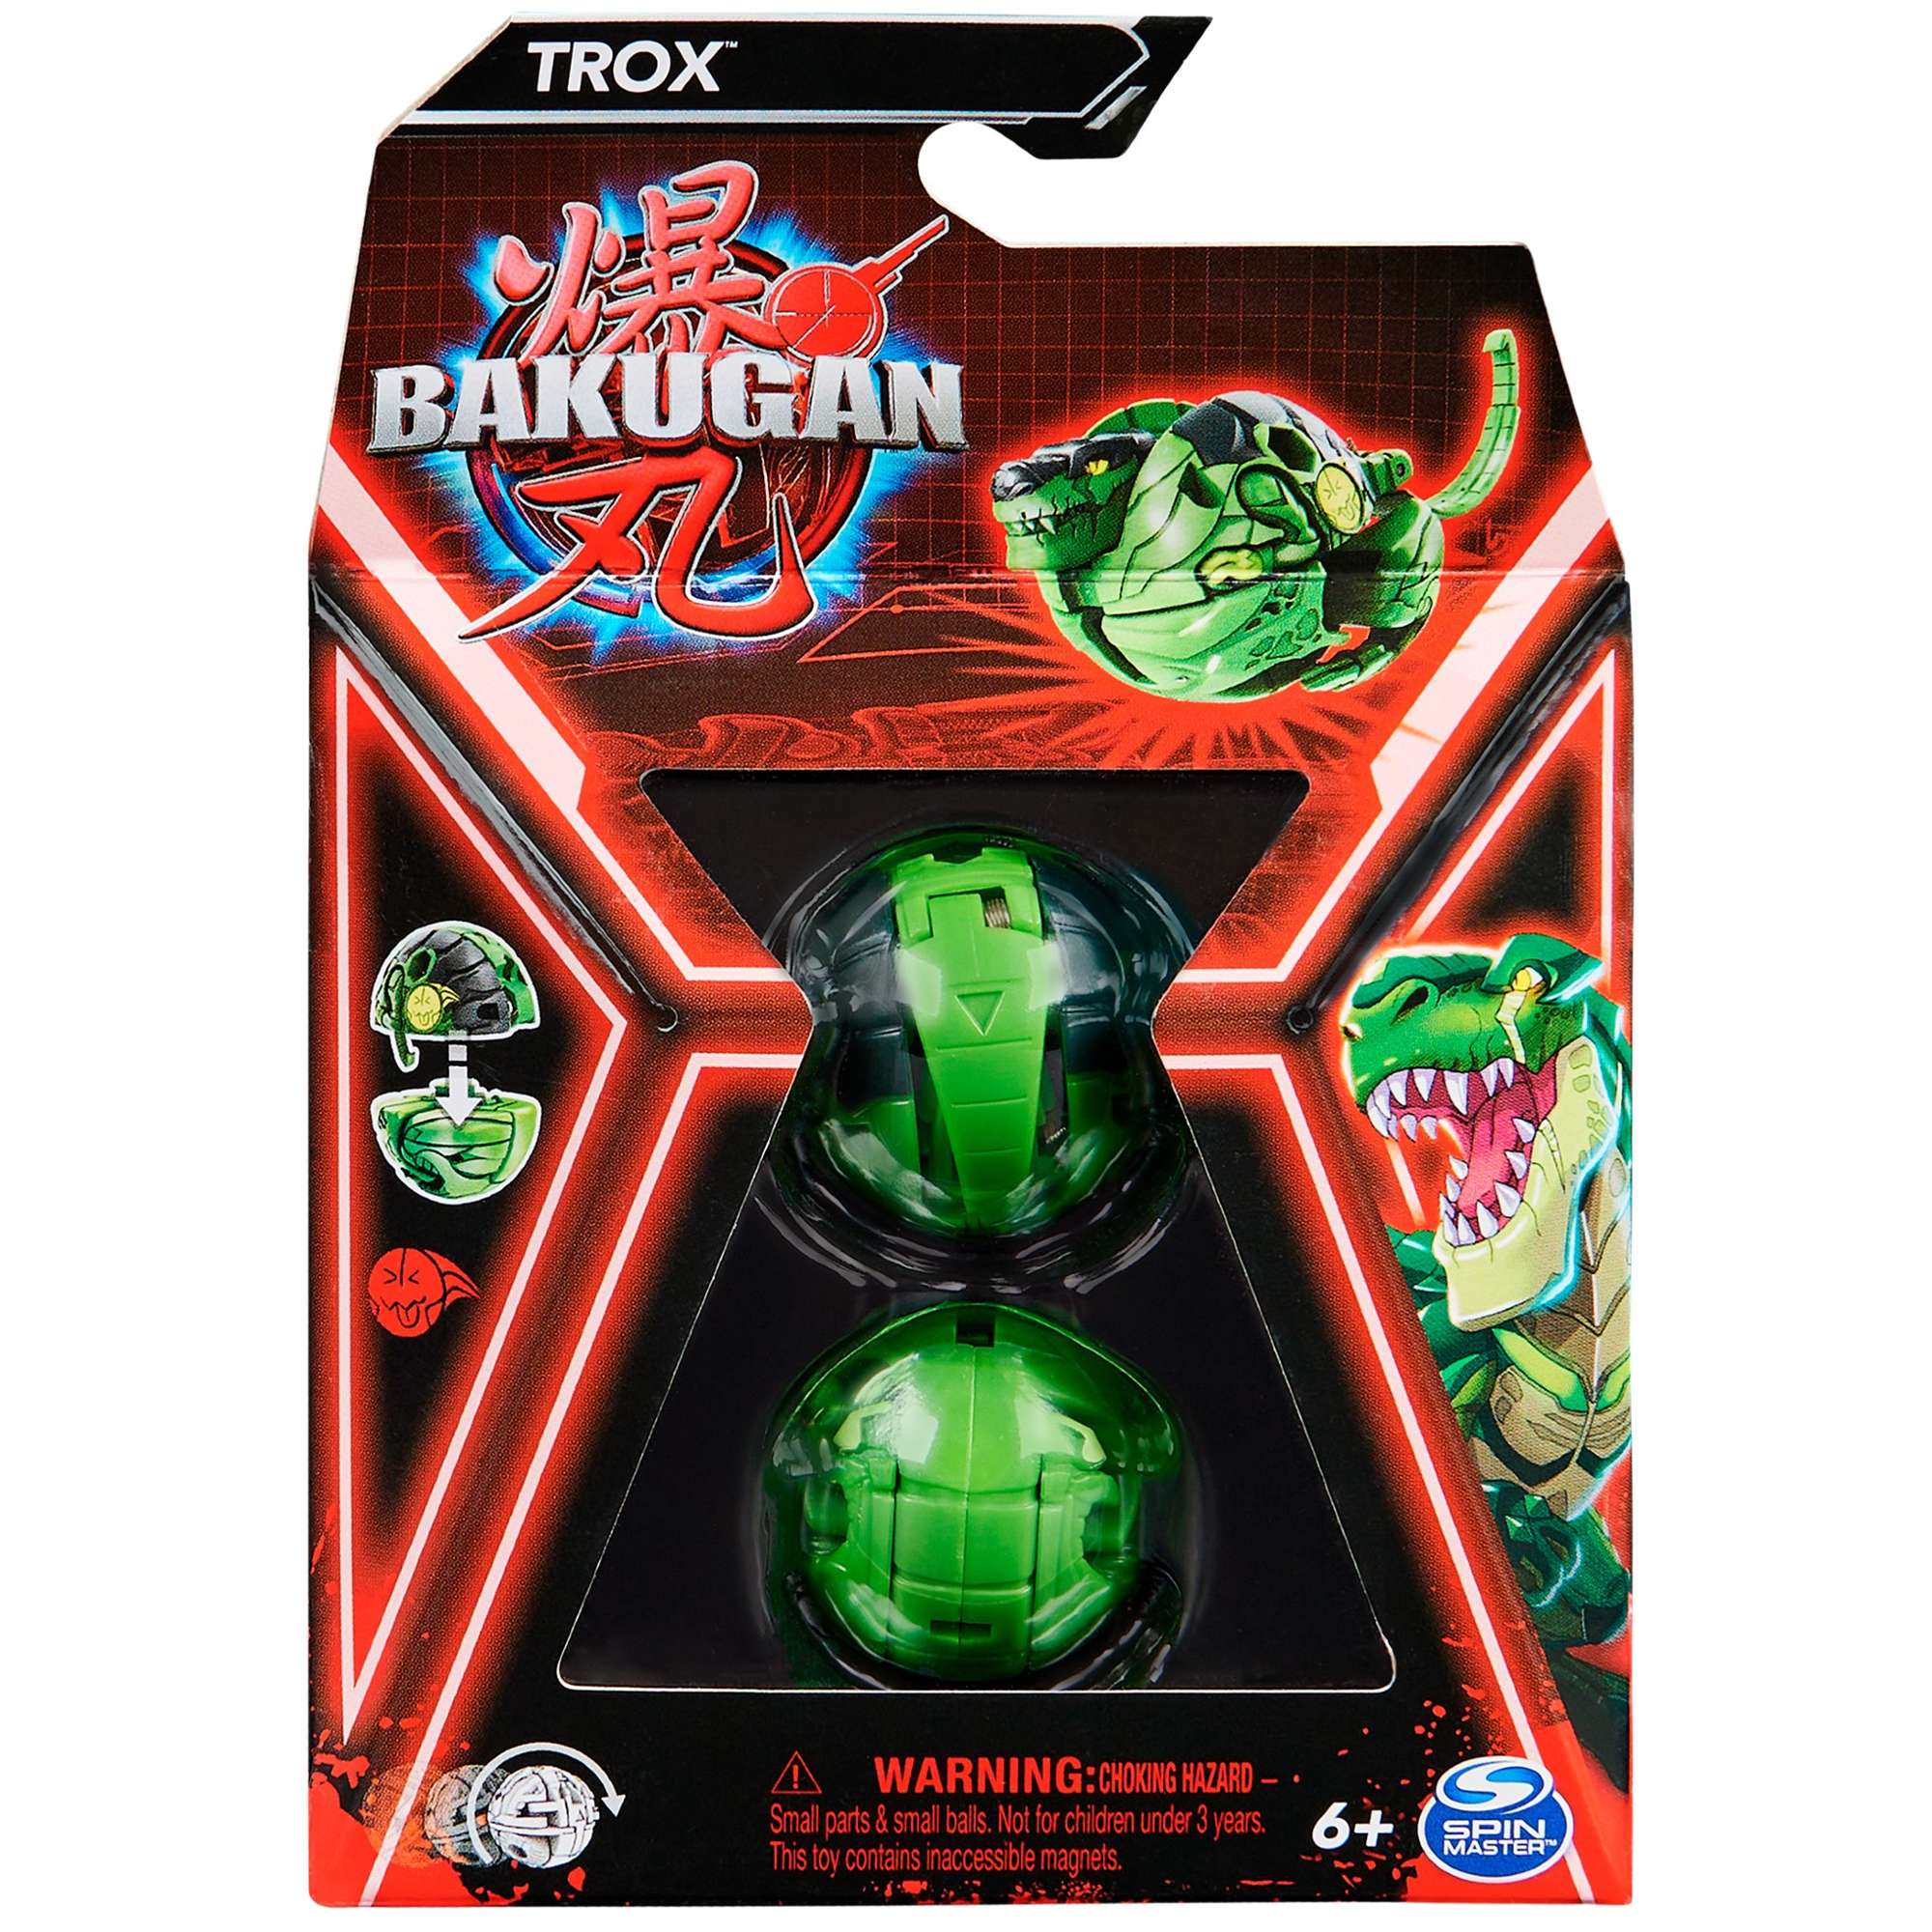 Bakugan Trox grüner Dinosaurier transformierende Kampffigur +